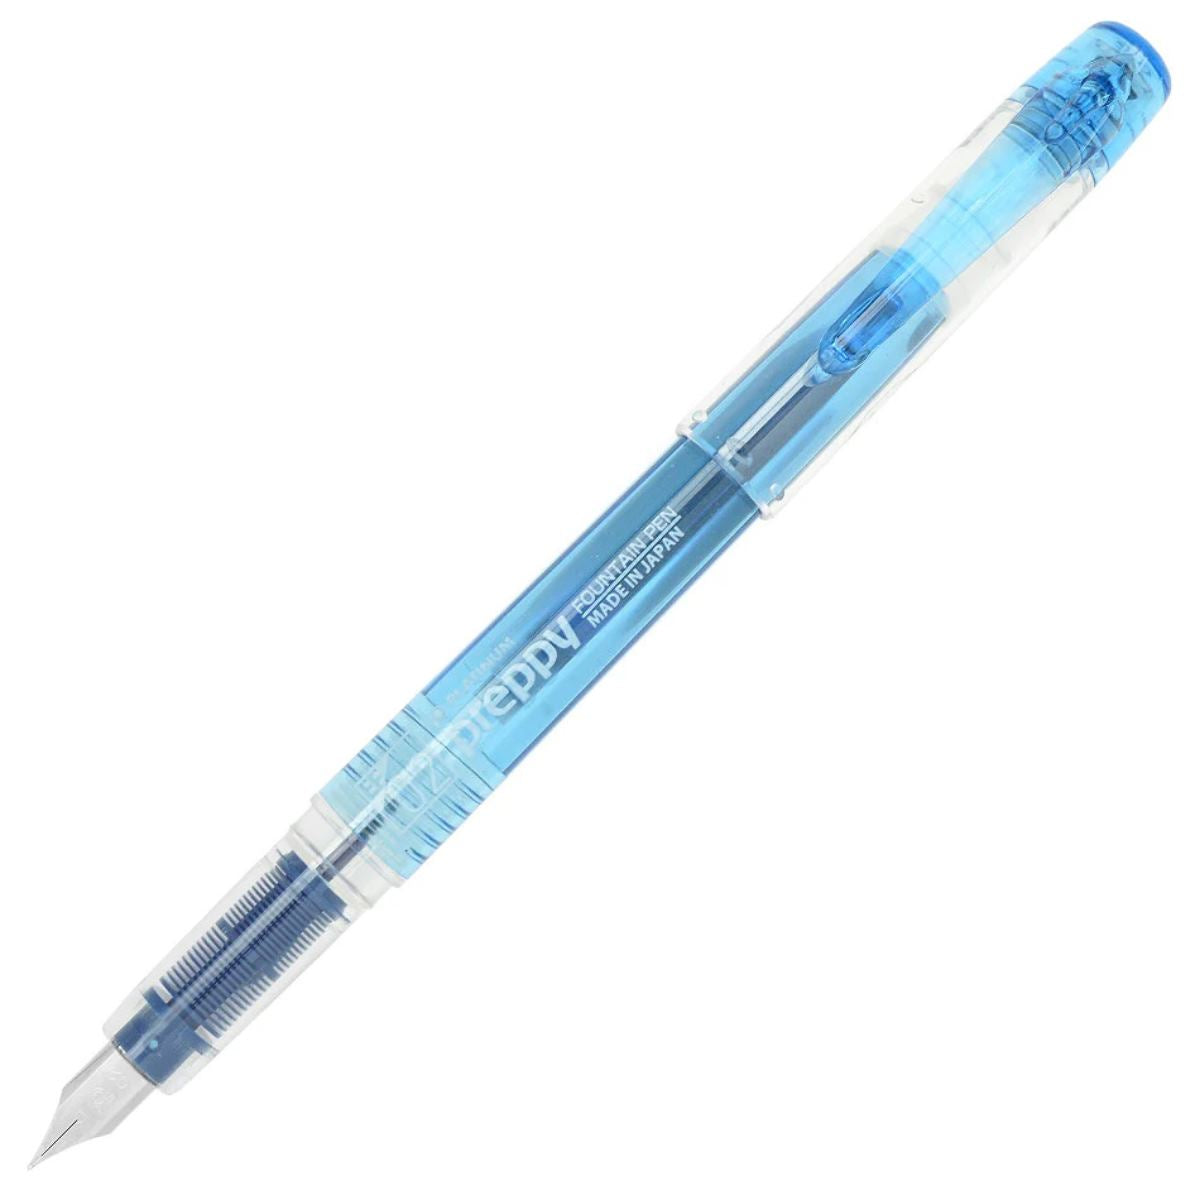 Platinum Preppy Fountain Pen - Blue Black - Extra Fine Nib